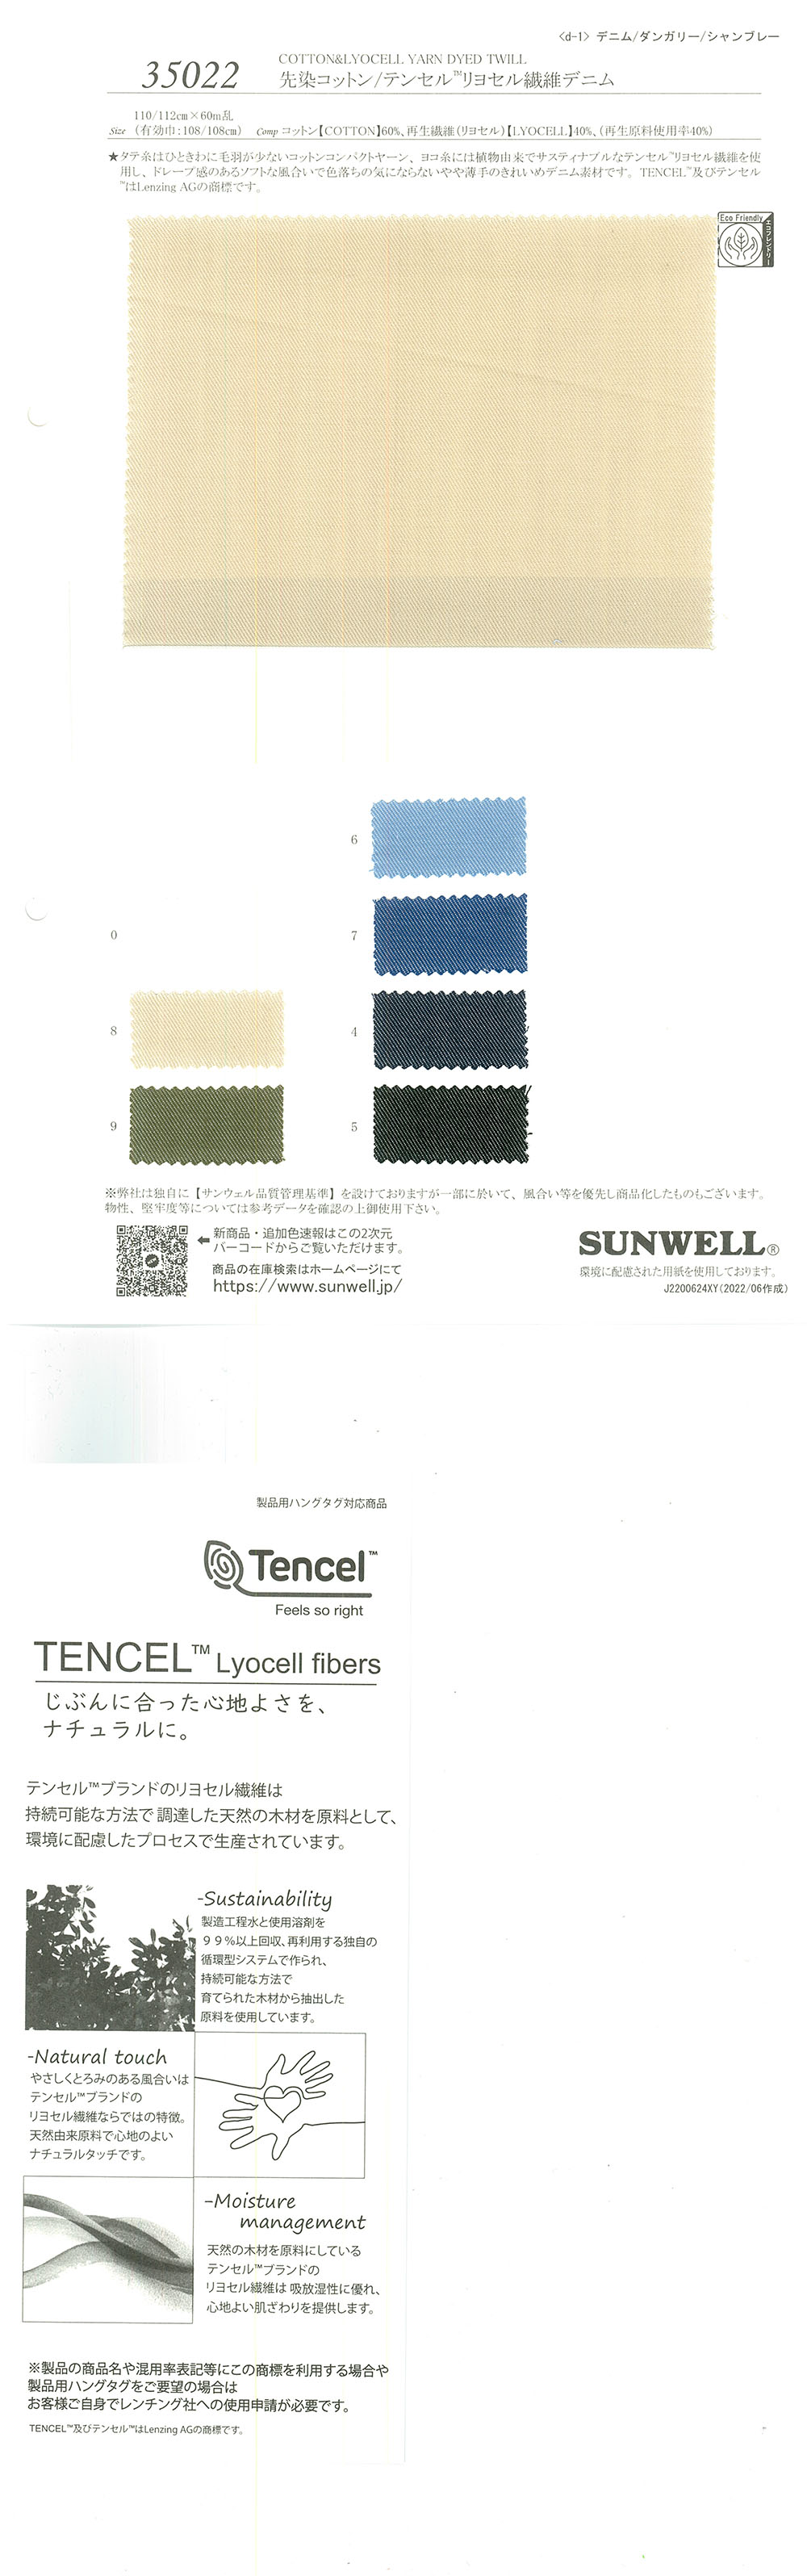 35022 Coton Teint En Fil / Tencel (TM) Fibre Lyocell Denim[Fabrication De Textile] SUNWELL